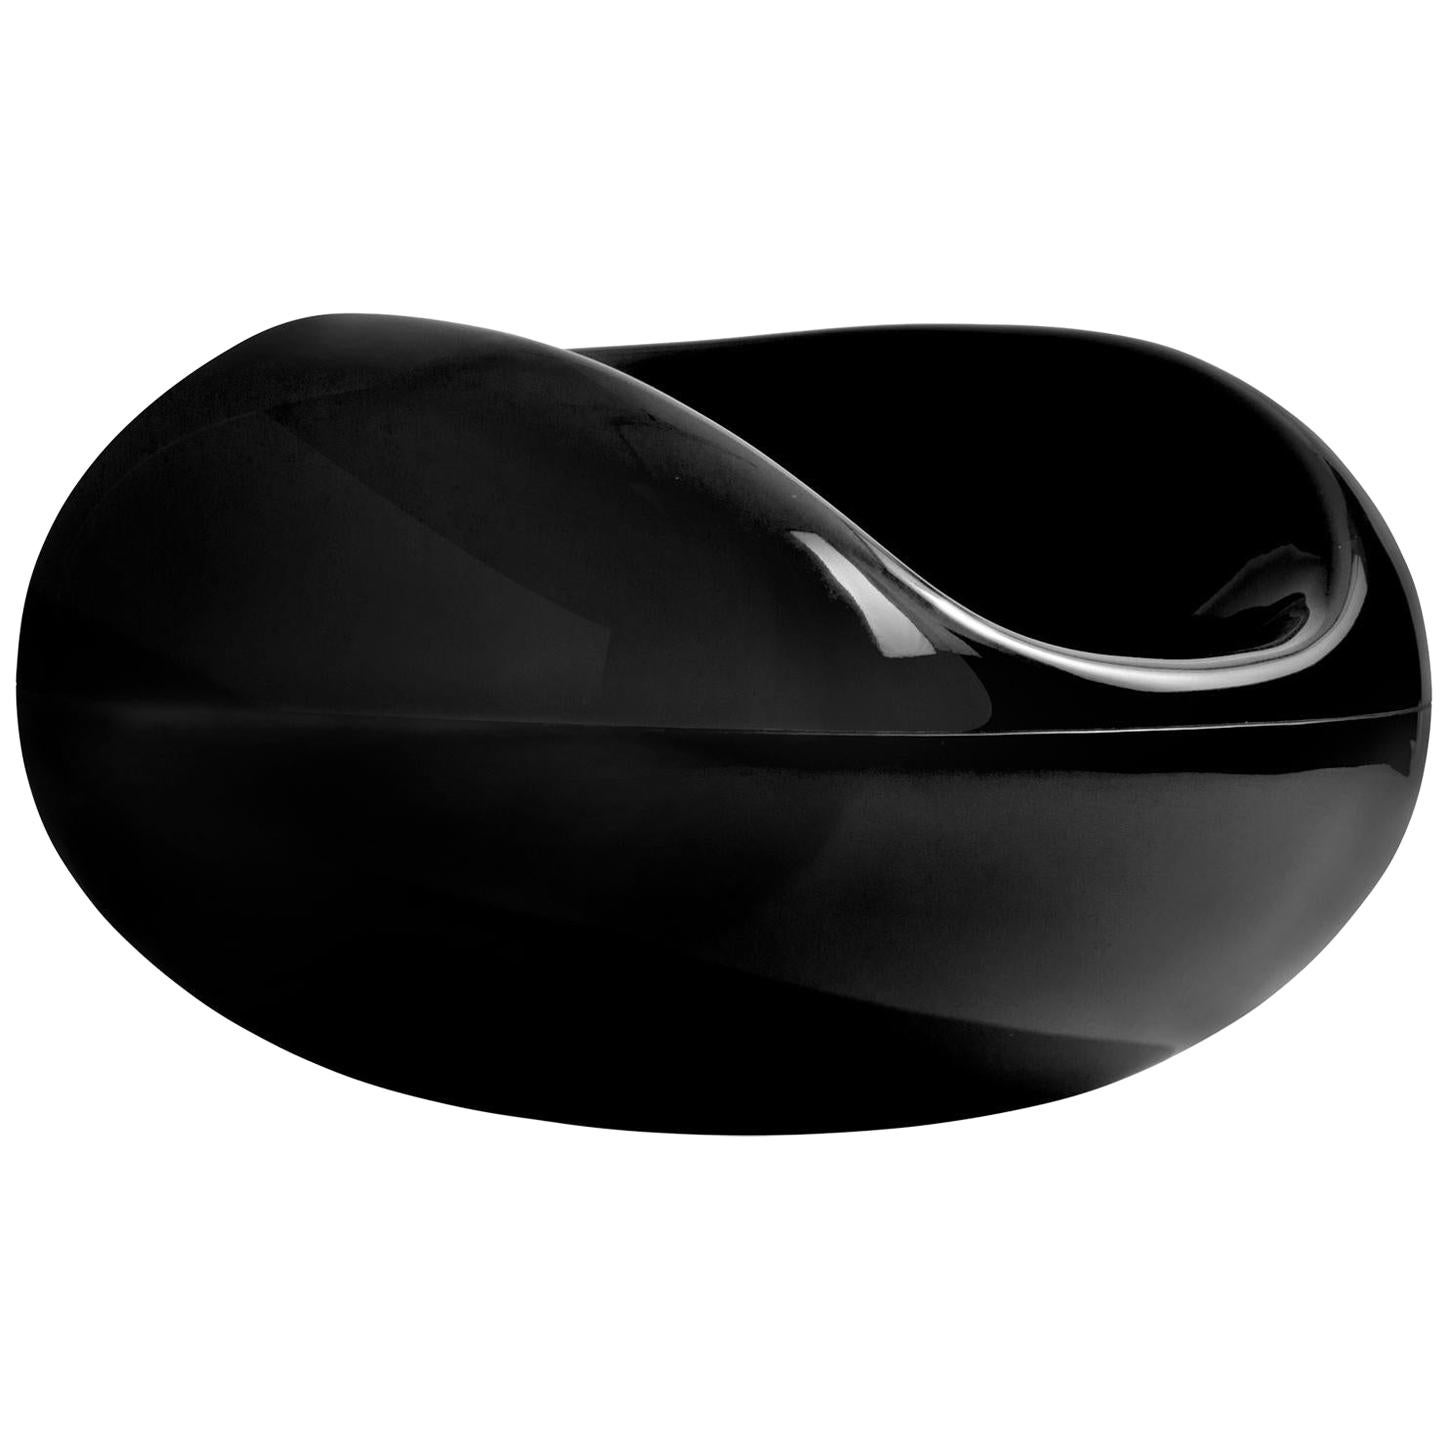 Ikonischer schwarzer Pastil-Stuhl von Eero Aarnio